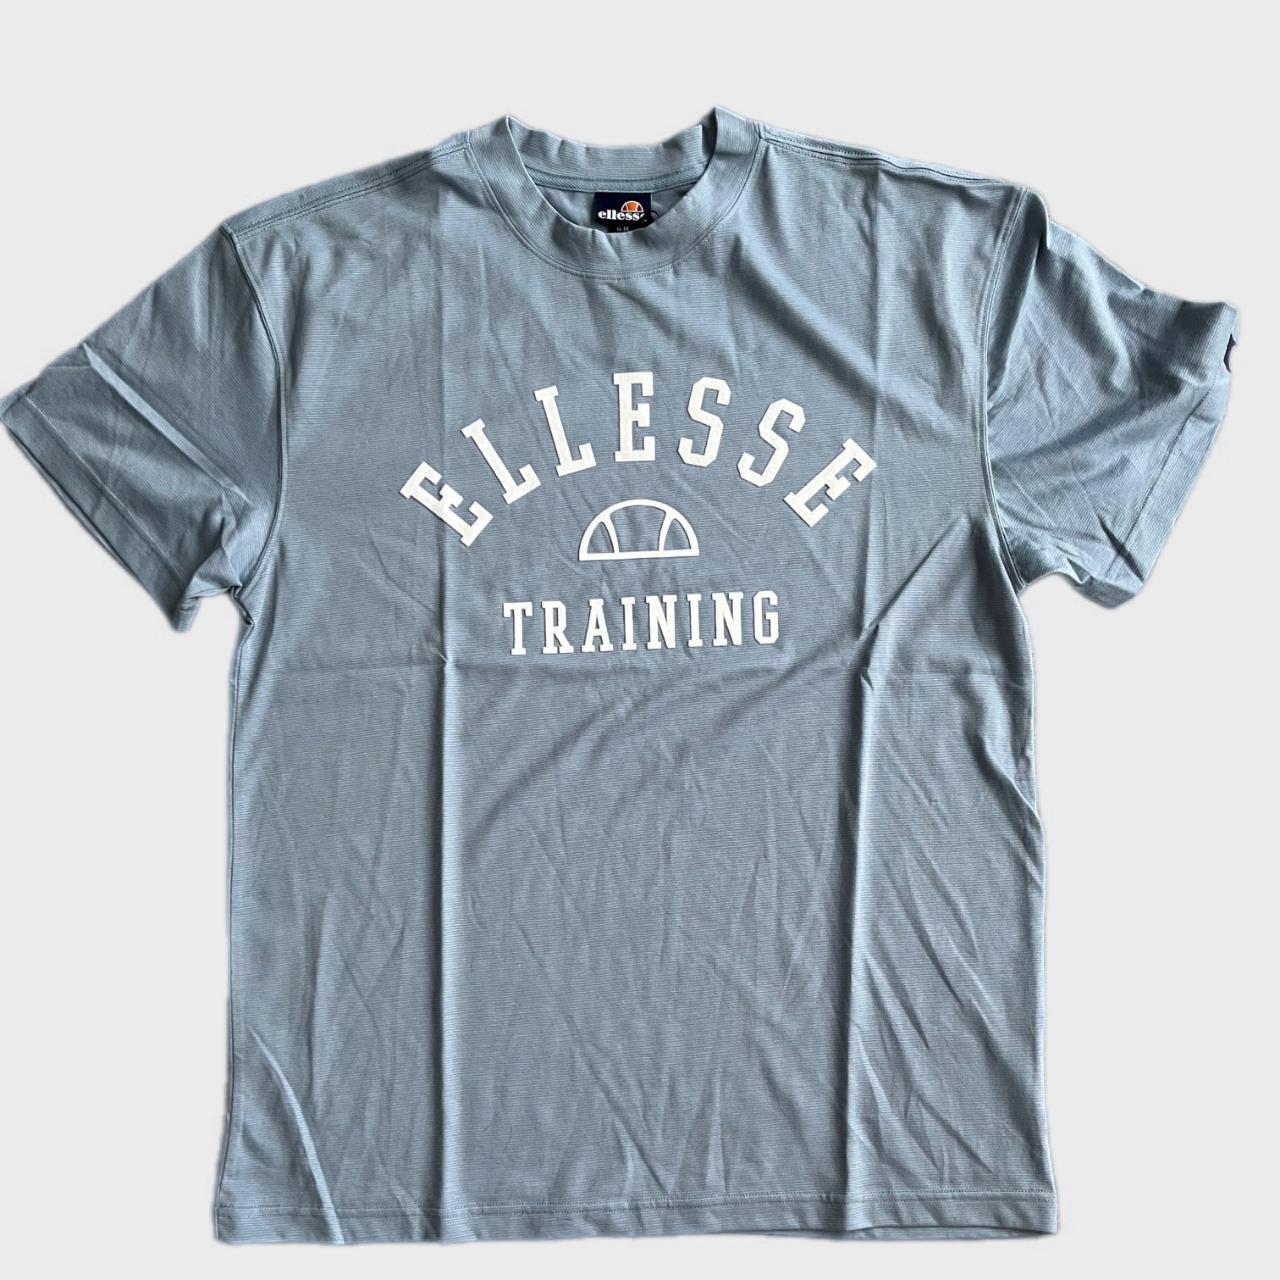 Ellesse, Ellesse Trainers & Clothing